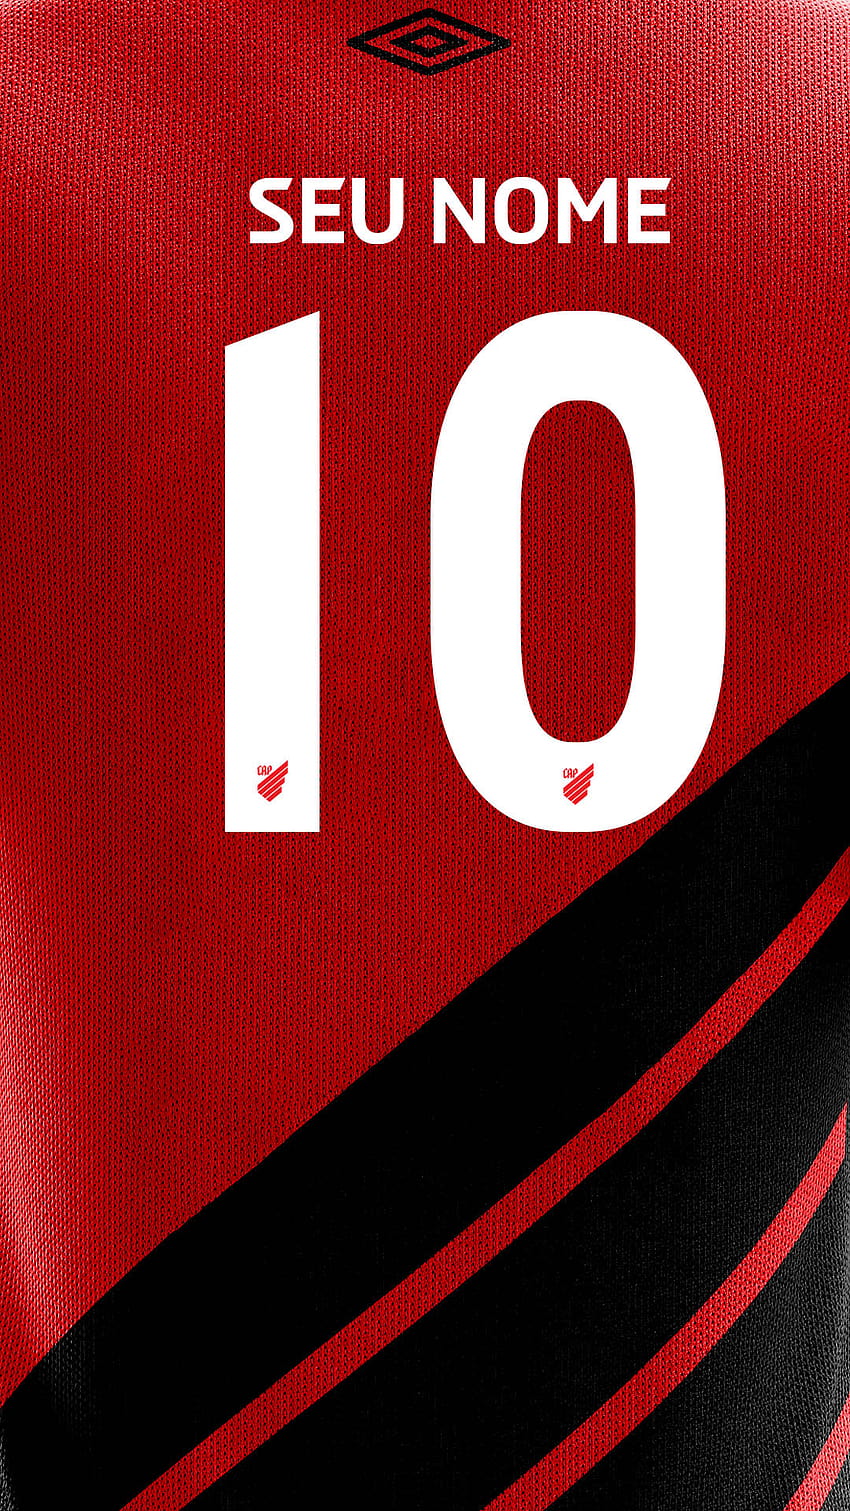 Atletico Paranaense FC, new logo, Serie A, red metal background, football,  CA Paranaense, HD wallpaper